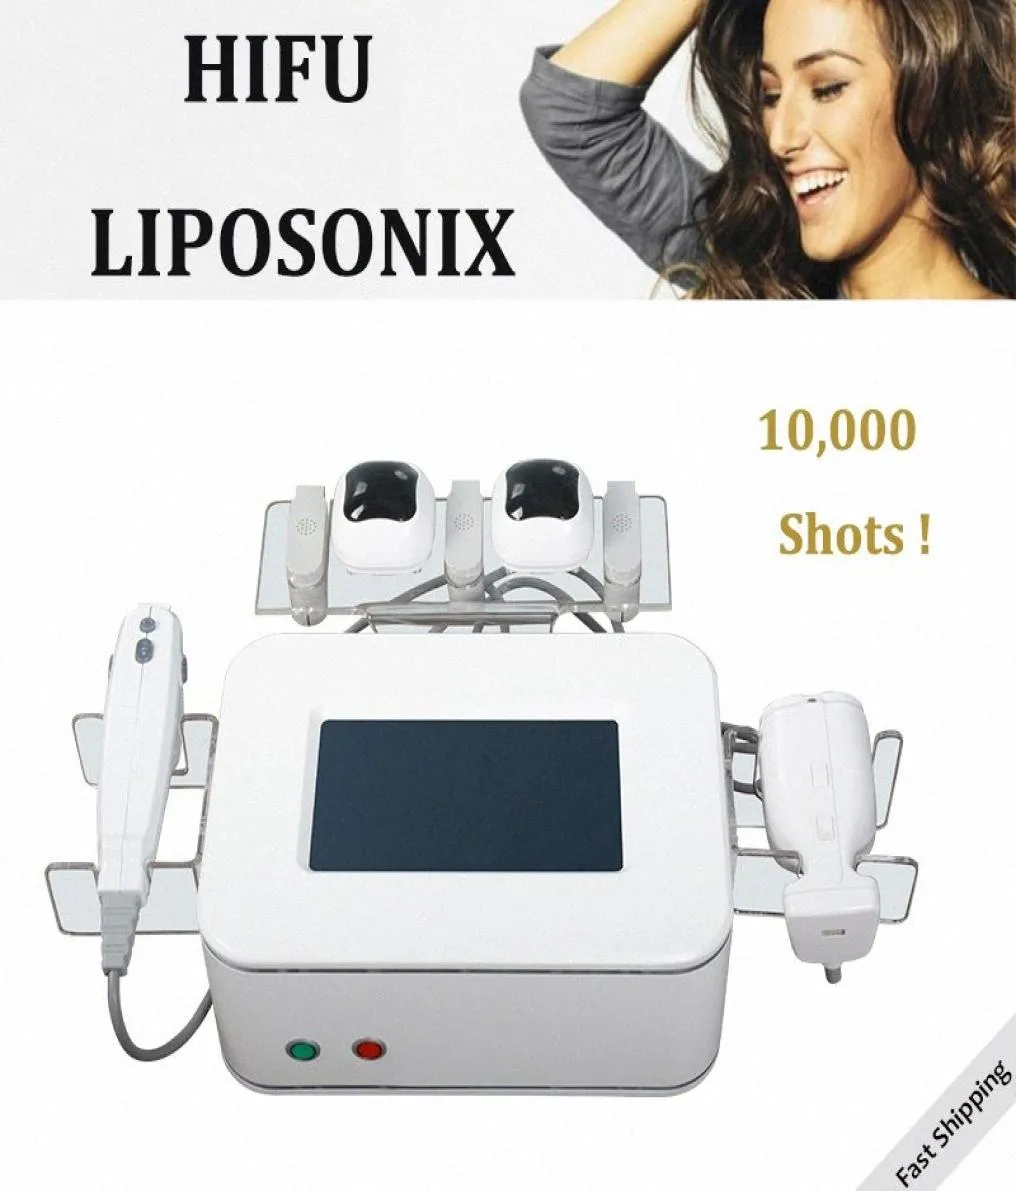 liposonix hifu face lifting high intensity focused ultrasound machine liposonix cellulite reduction body slimming hifu beauty eq4990708